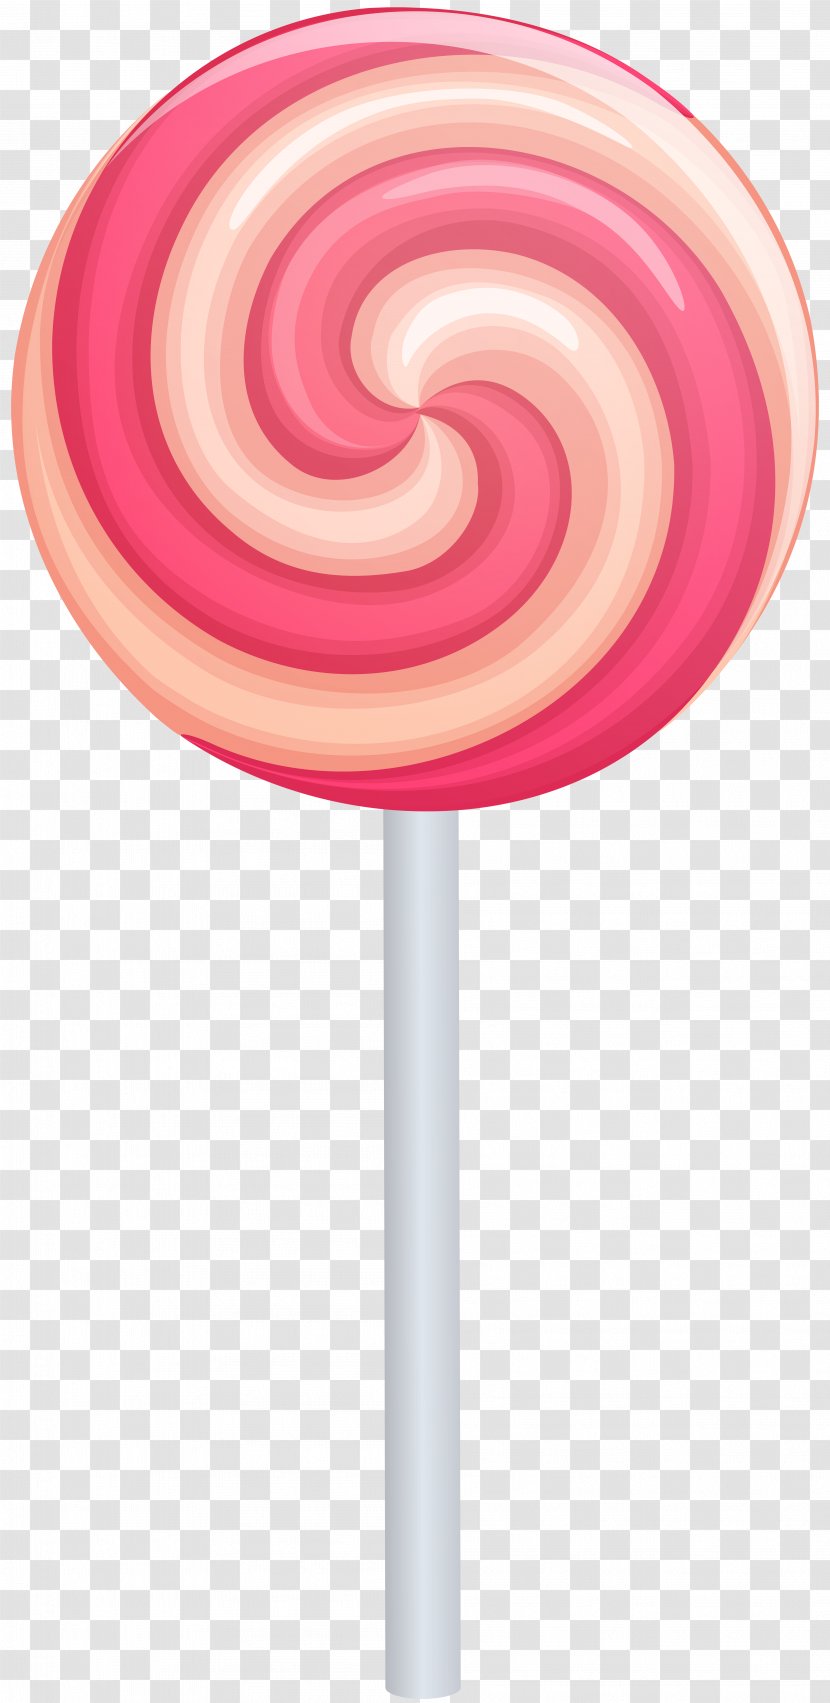 Lollipop Candy Clip Art - Microsoft Office - Pink Swirl Image Transparent PNG